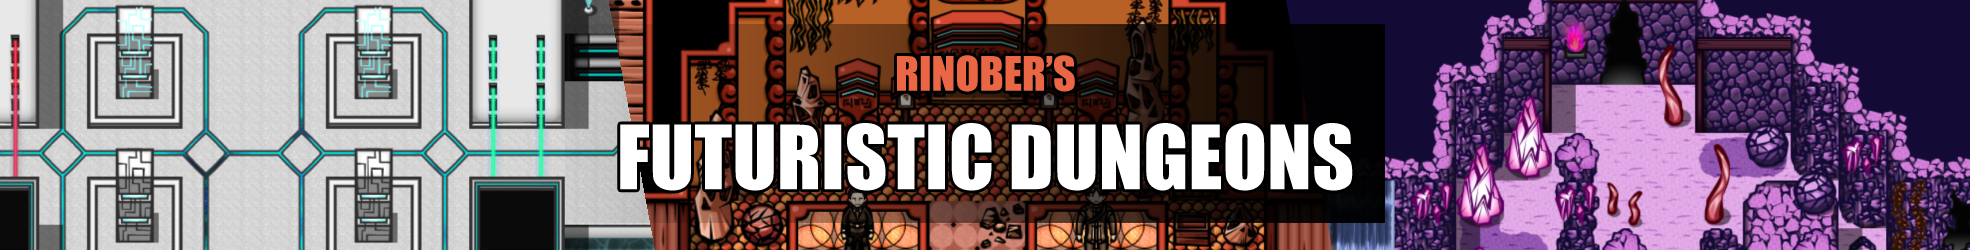 Rinober's Futuristic Dungeons